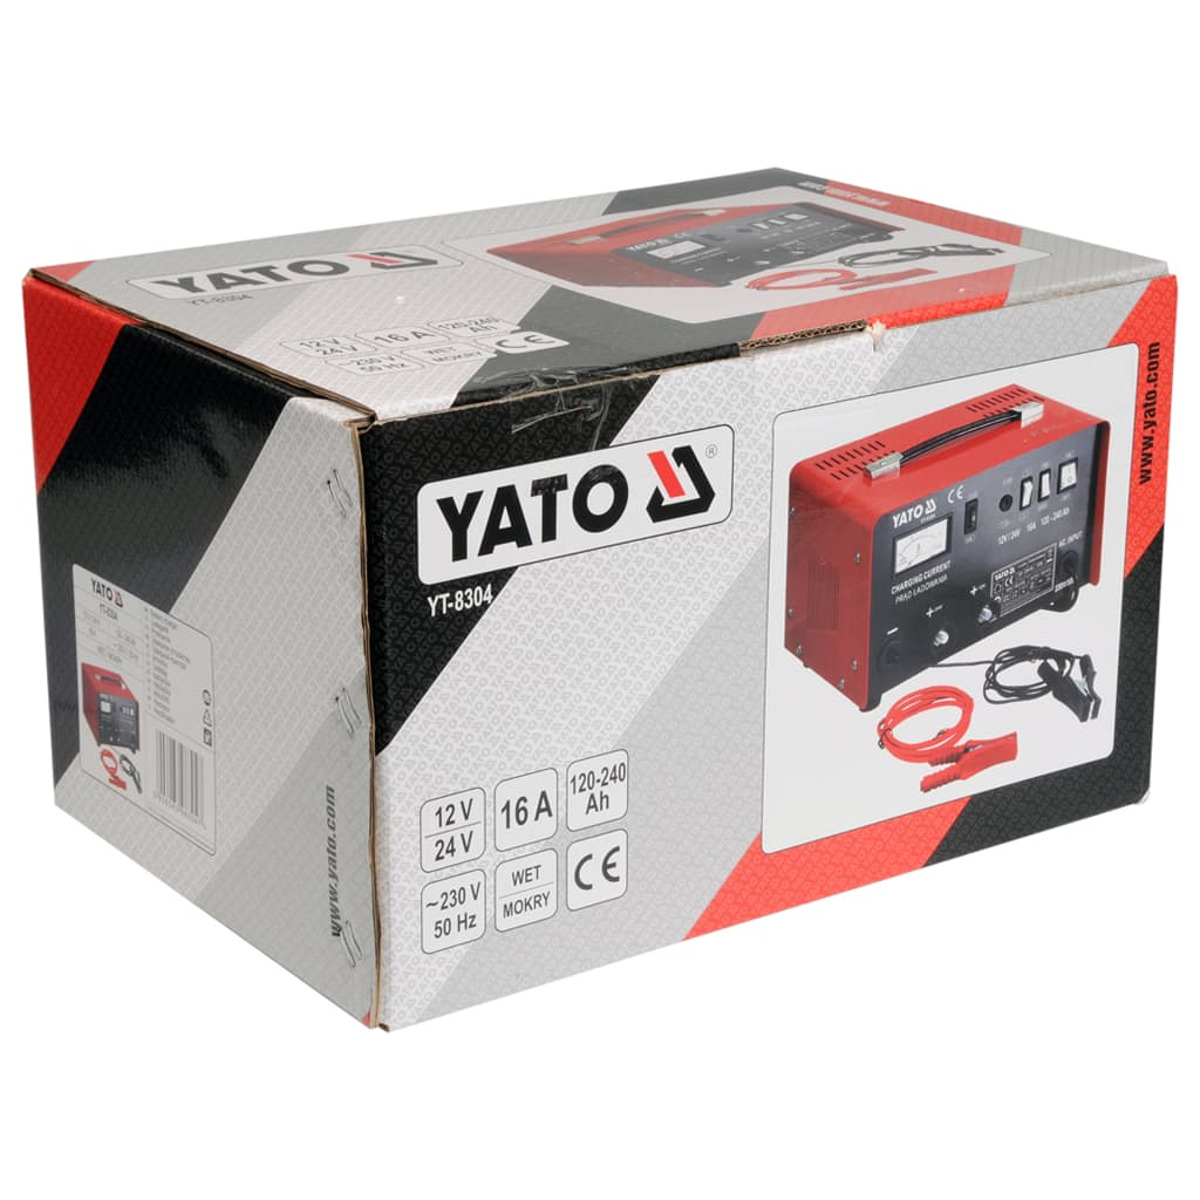 Red Universal, Batterieladegerät YATO 434492